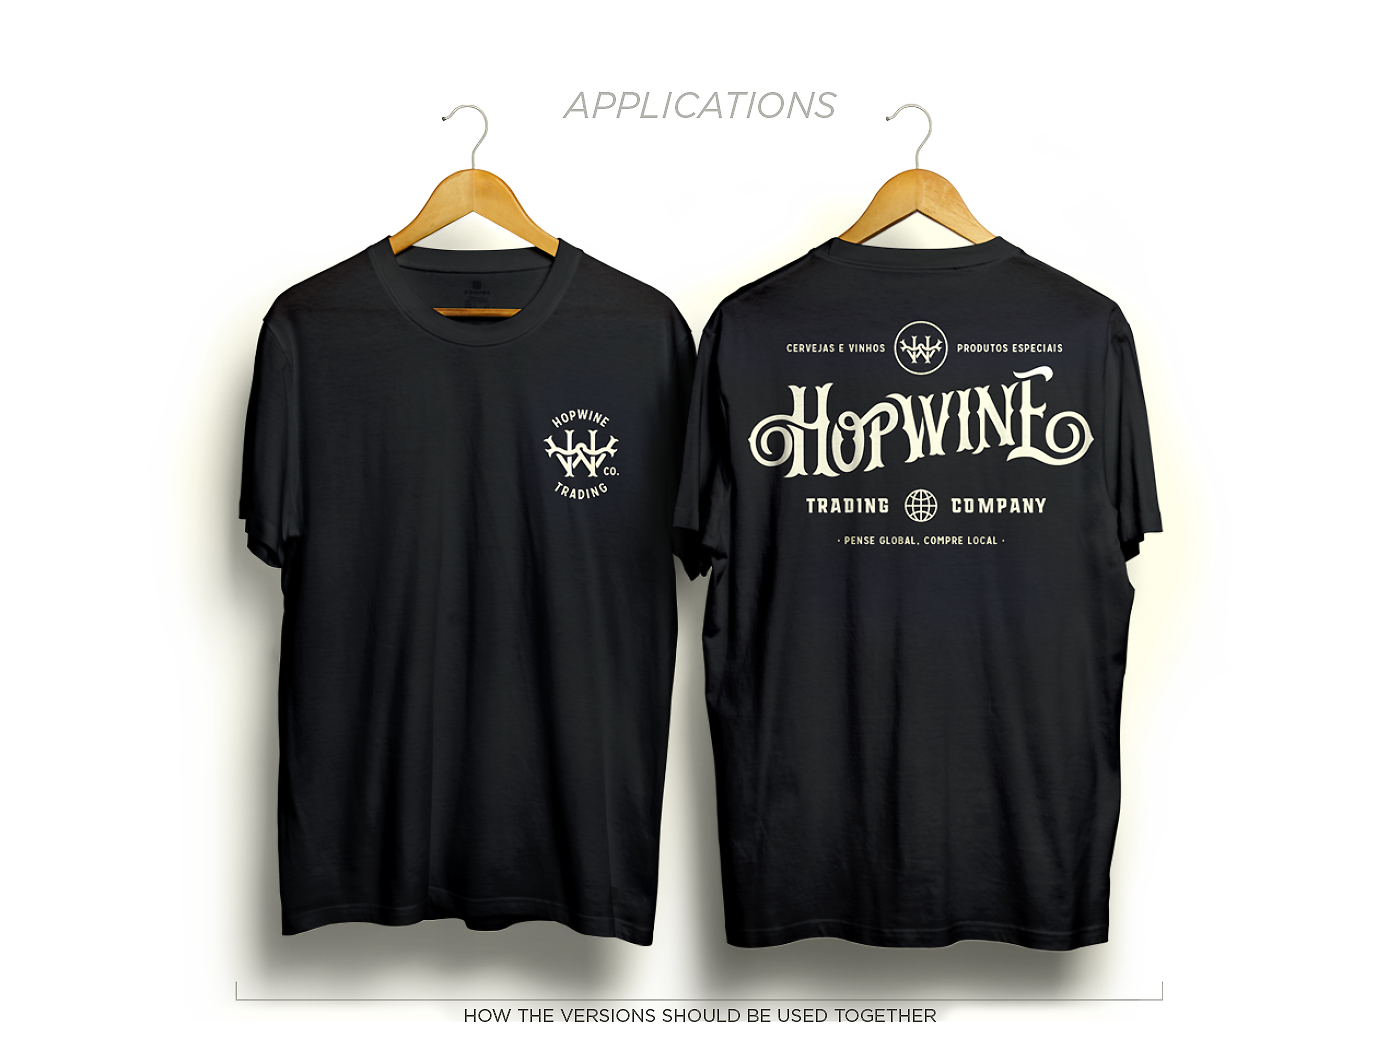 Hopwine Trading Co. on Behance